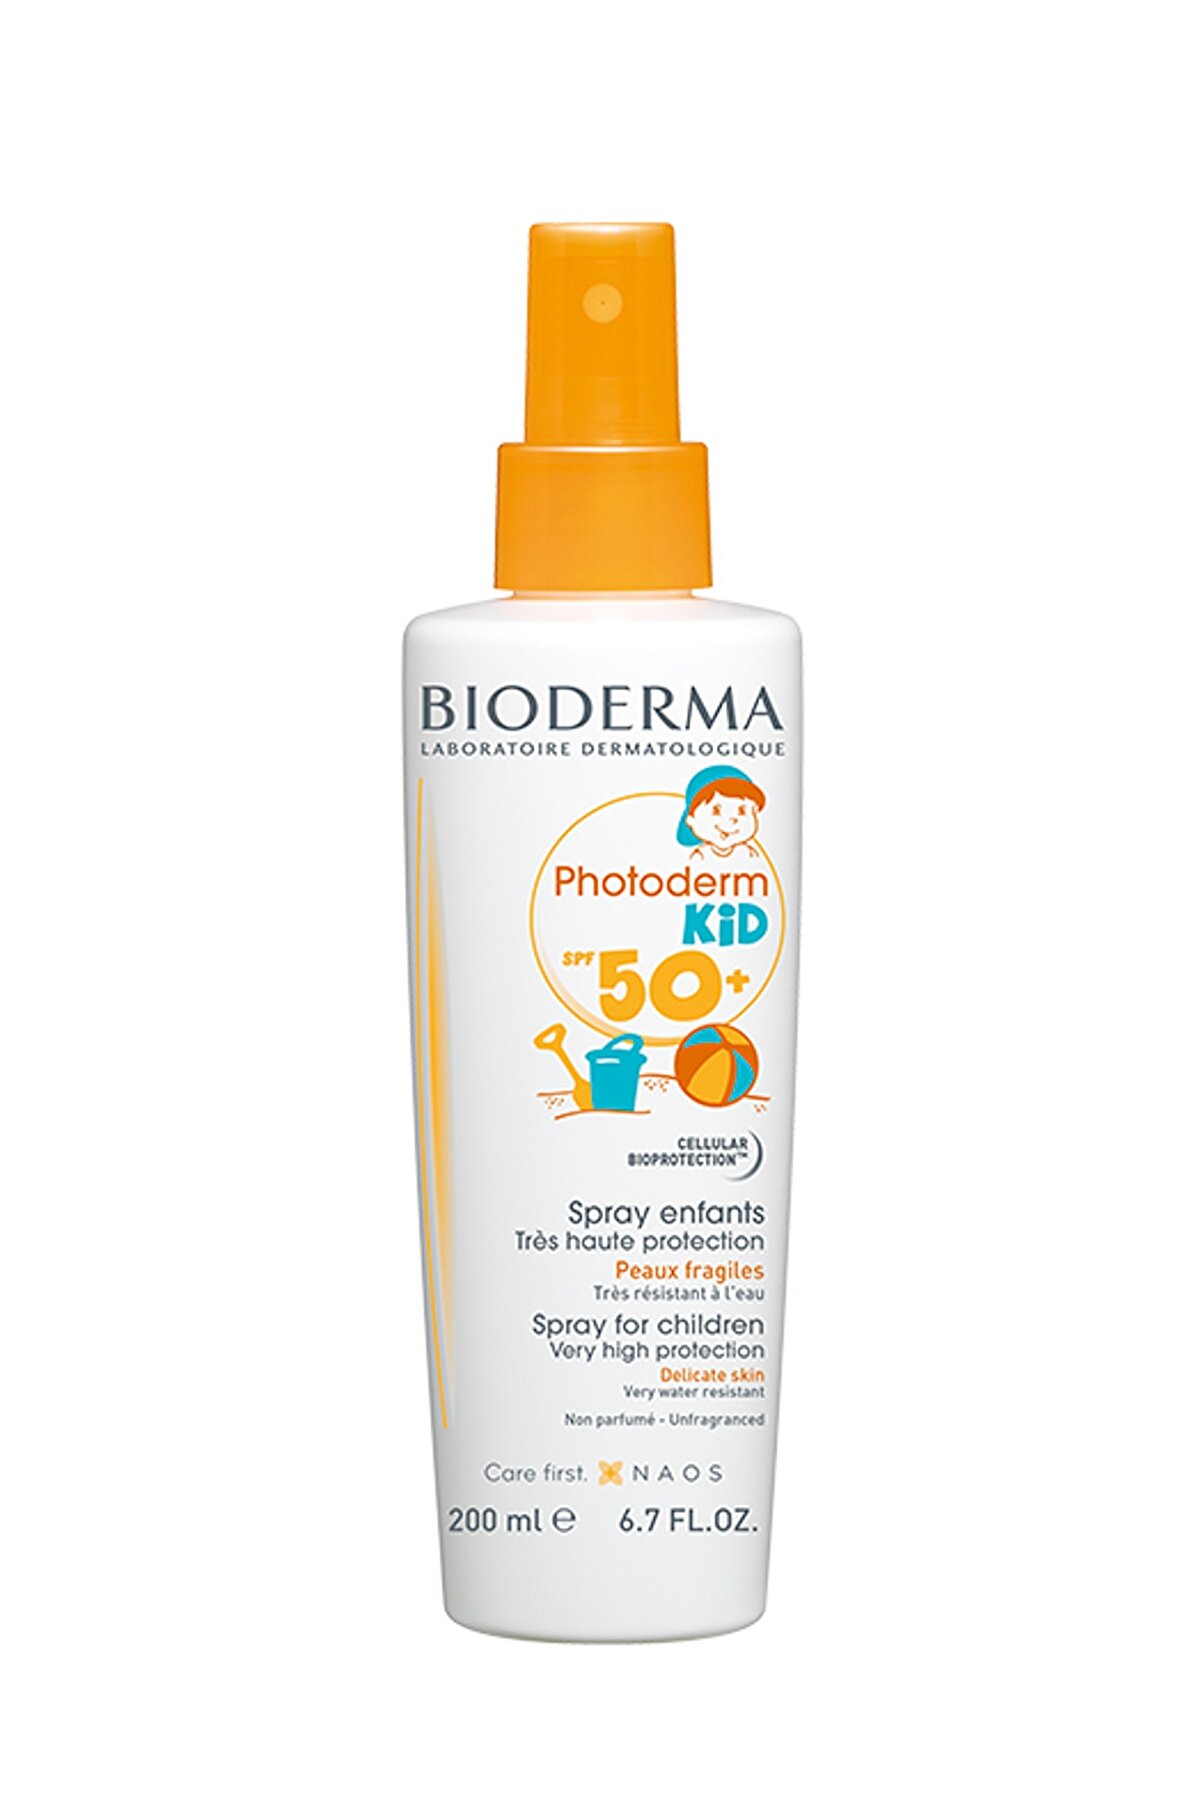 Bioderma Photoderm KID Spray SPF 50+  200 ml